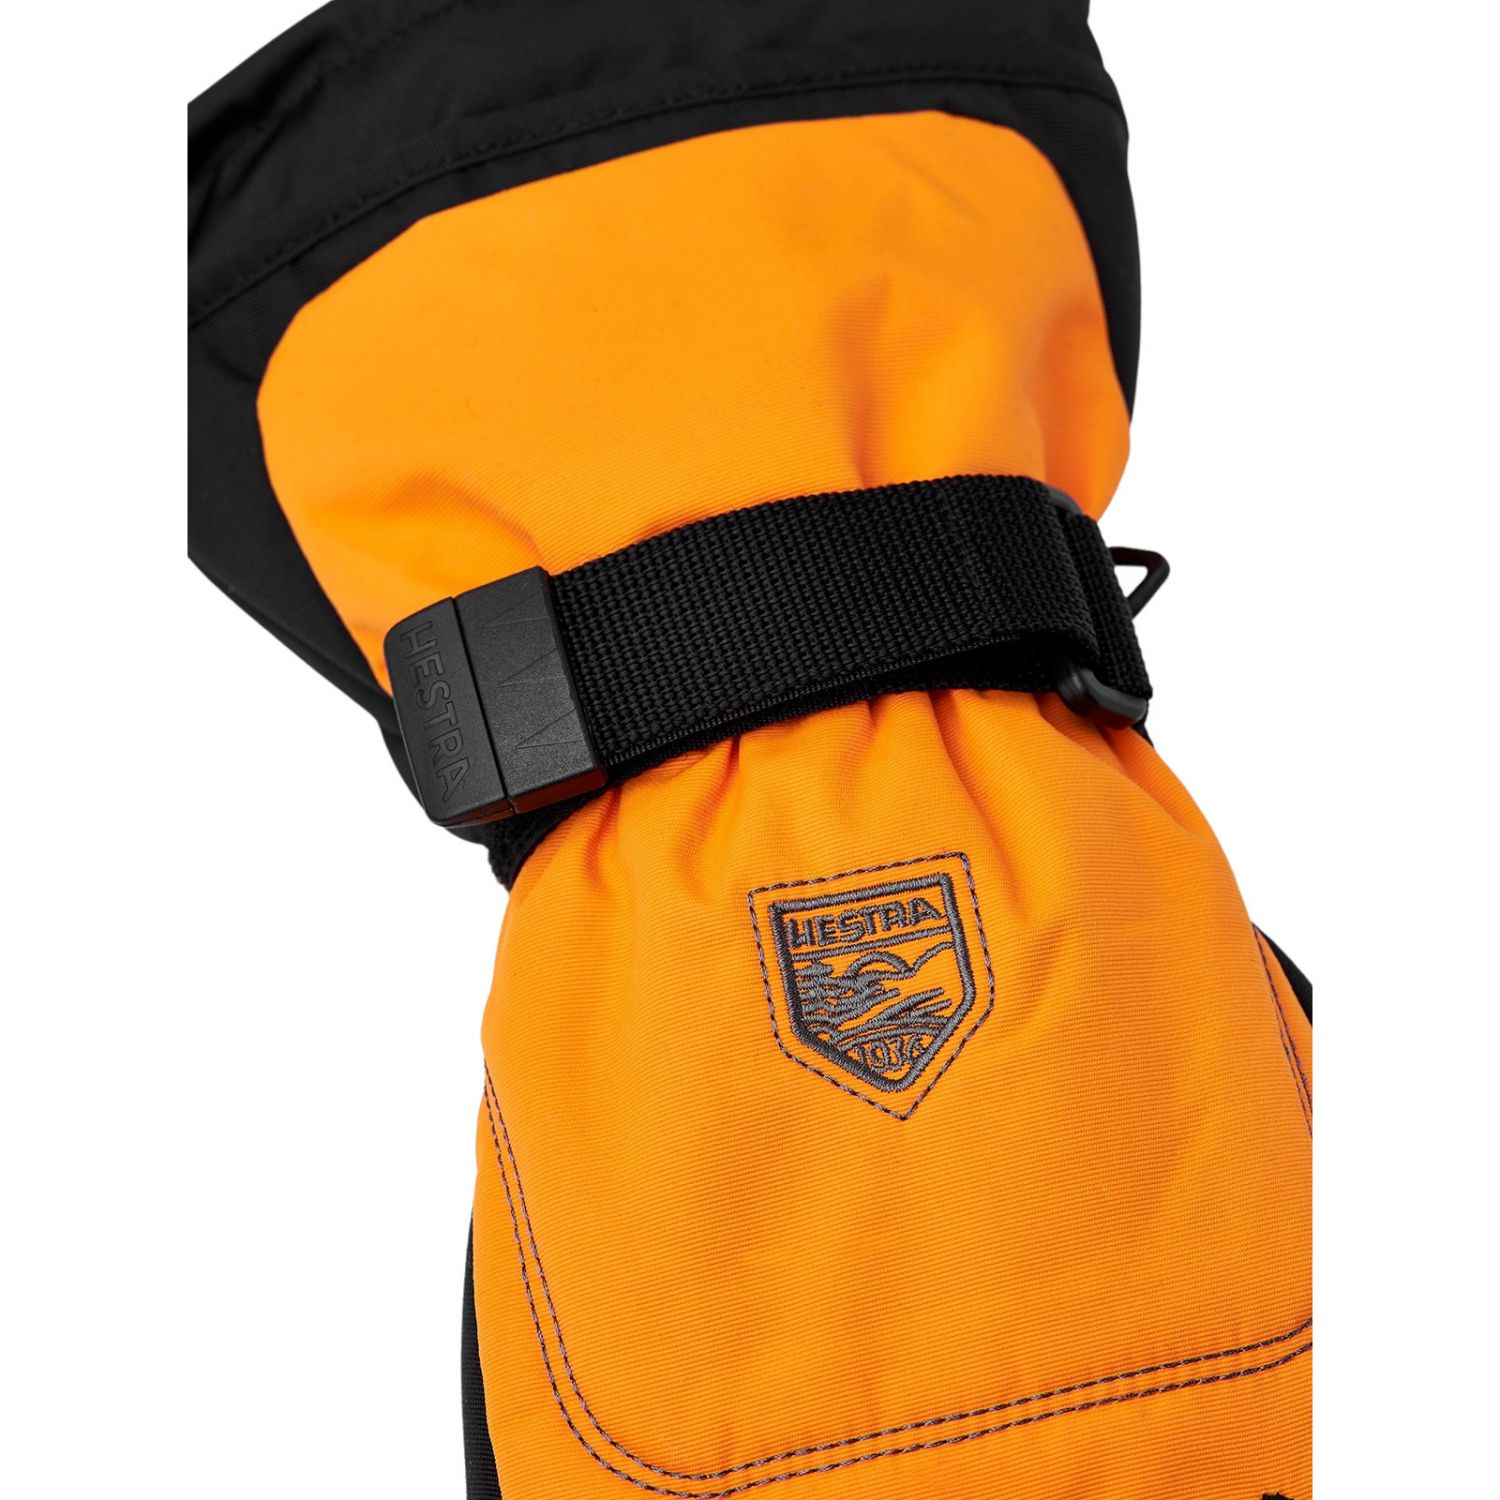 Hestra Gauntlet Sr, gants de ski, orange/orange